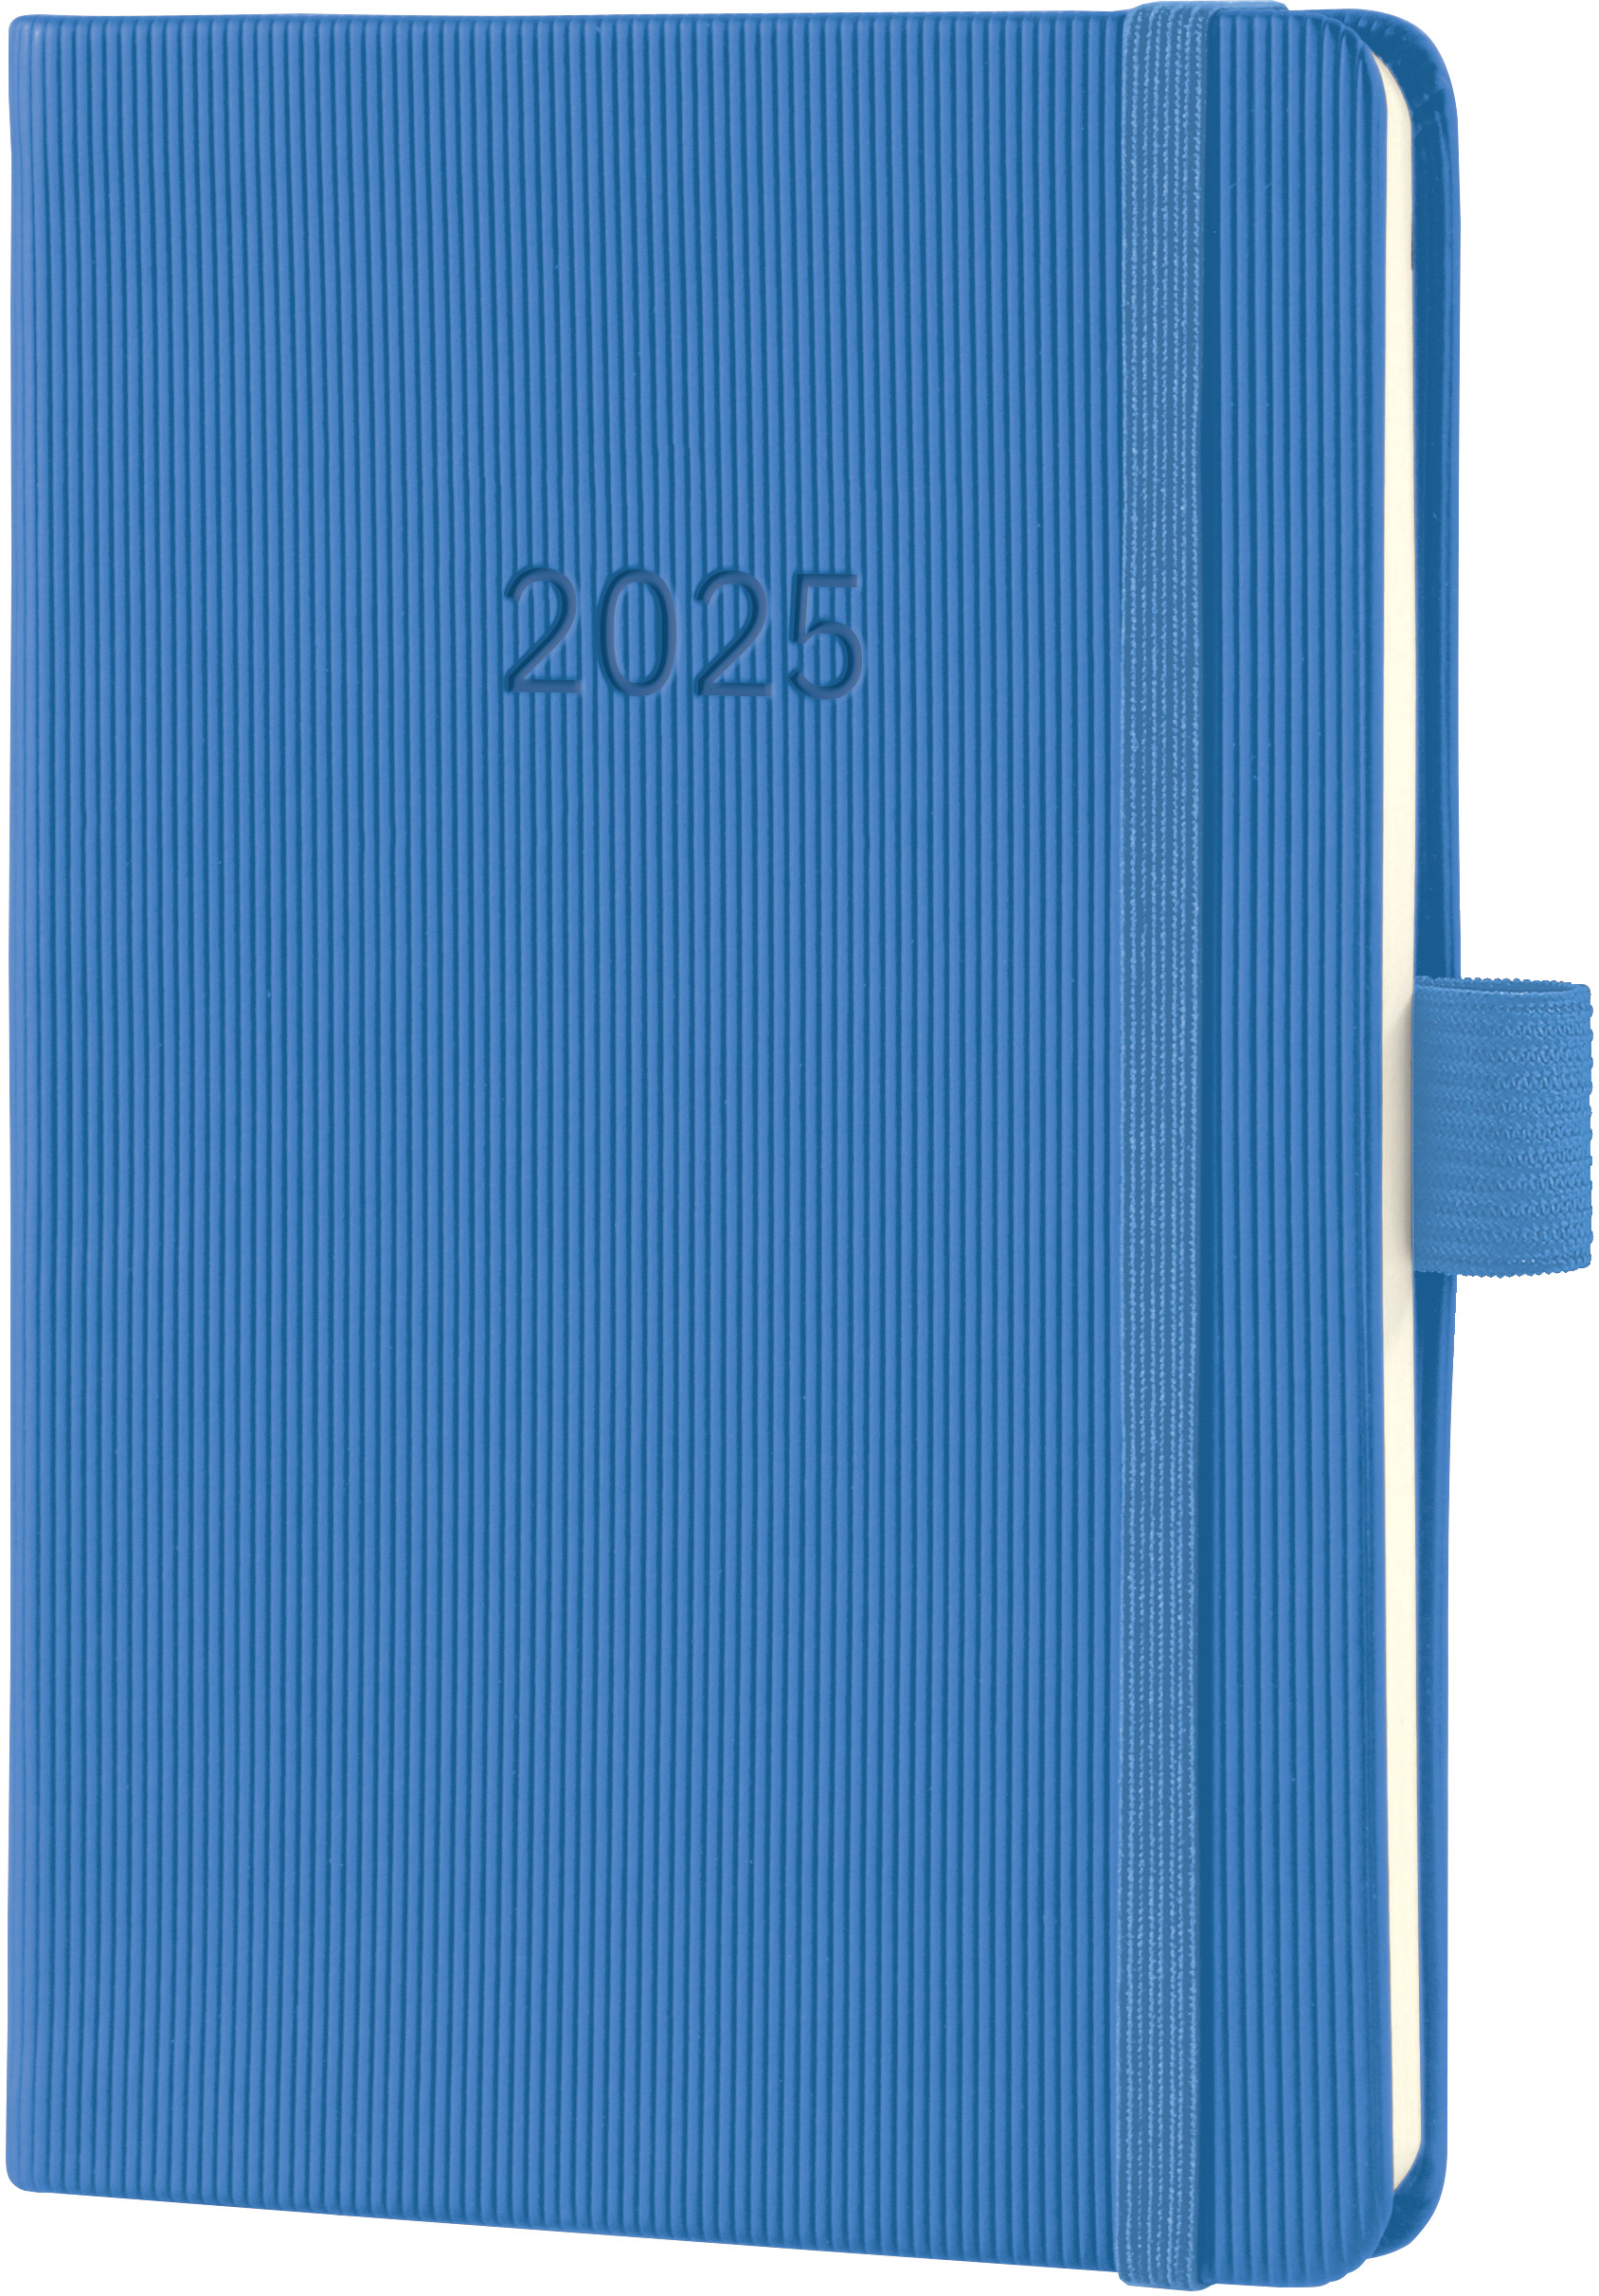 CONCEPTUM Calendrier semainier 2025 C2569 1S/2P bleu 15.1x10.8cm